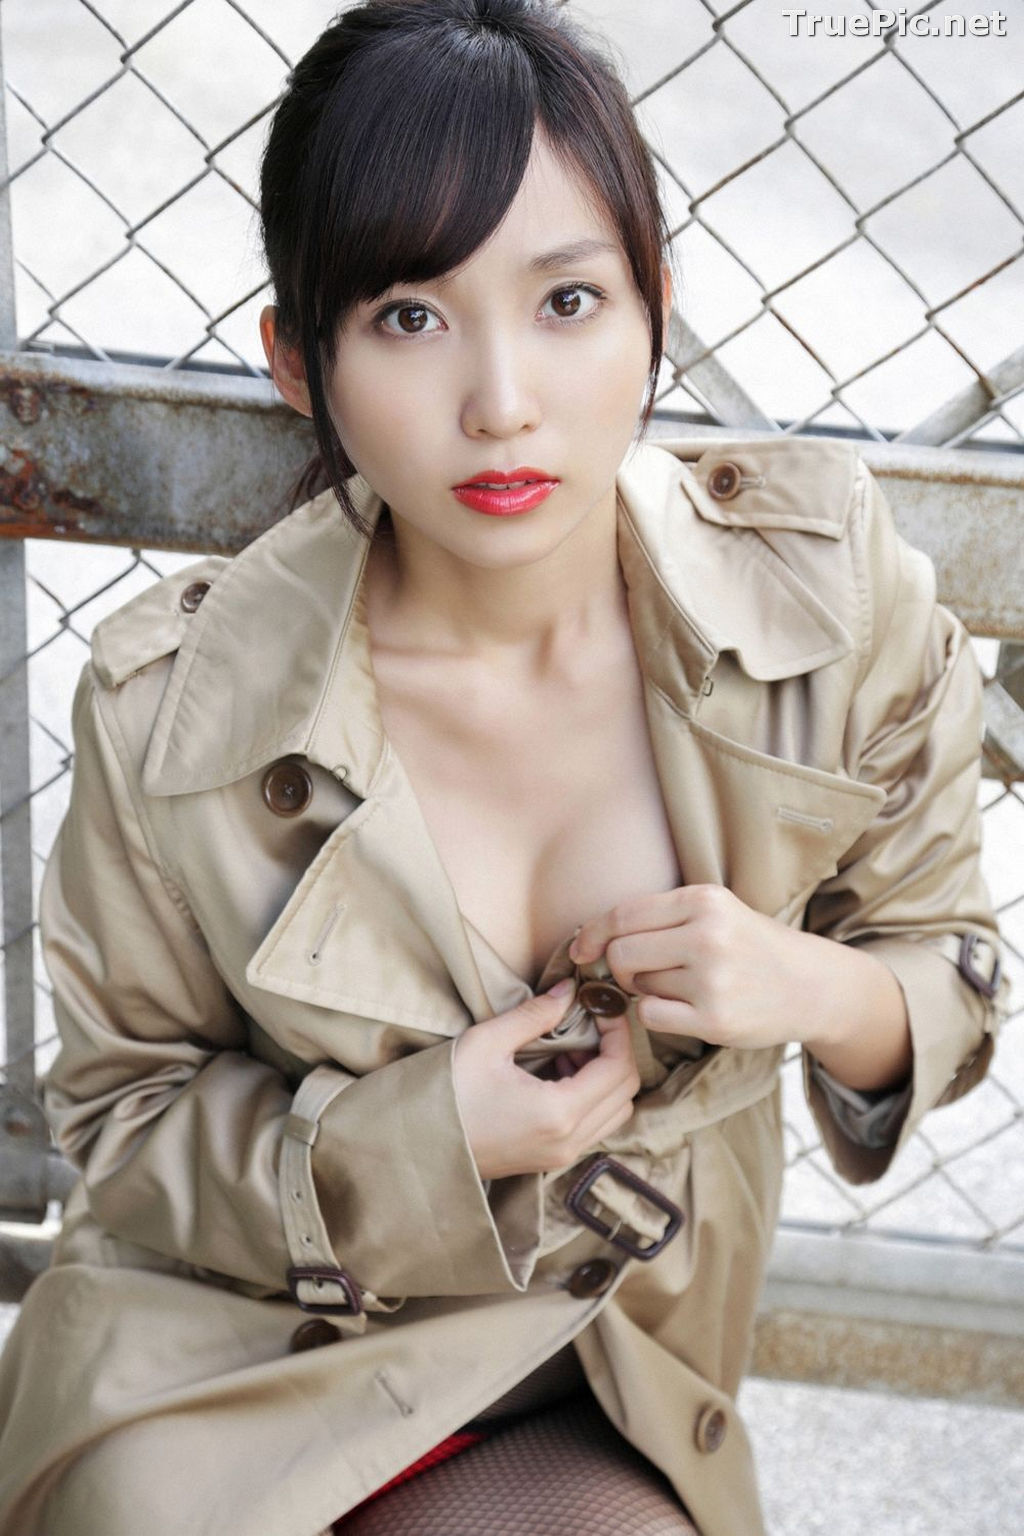 Image [YS Web] Vol.527 - Japanese Gravure Idol and Singer - Risa Yoshiki - TruePic.net - Picture-22